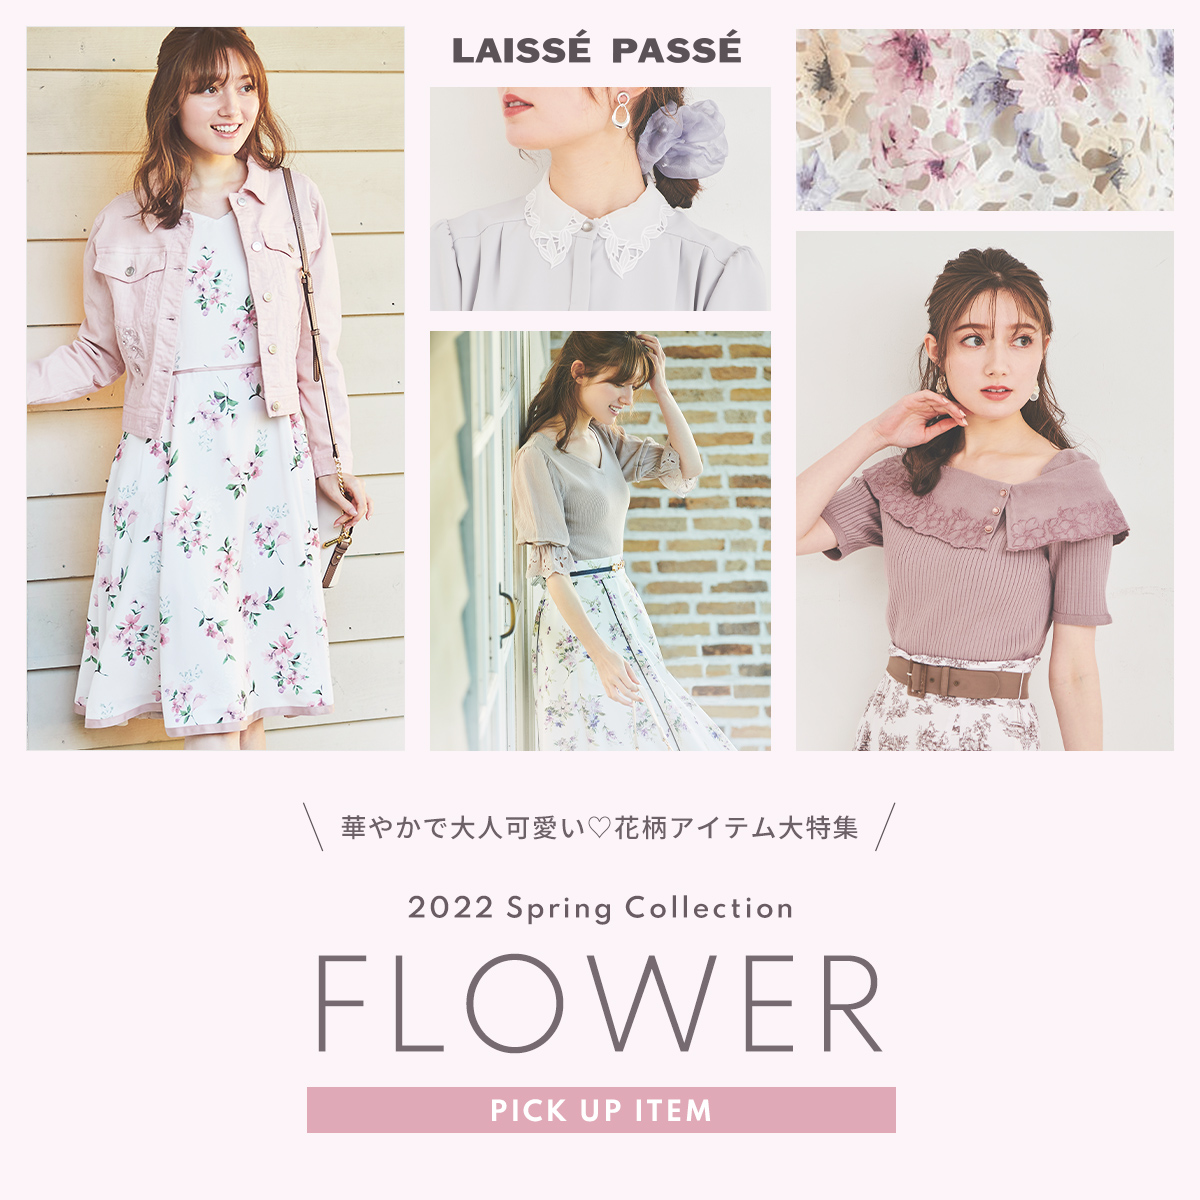 LAISSE PASSE＞2022 Spring Collection FLOWER PICK UP ITEM ｜株式